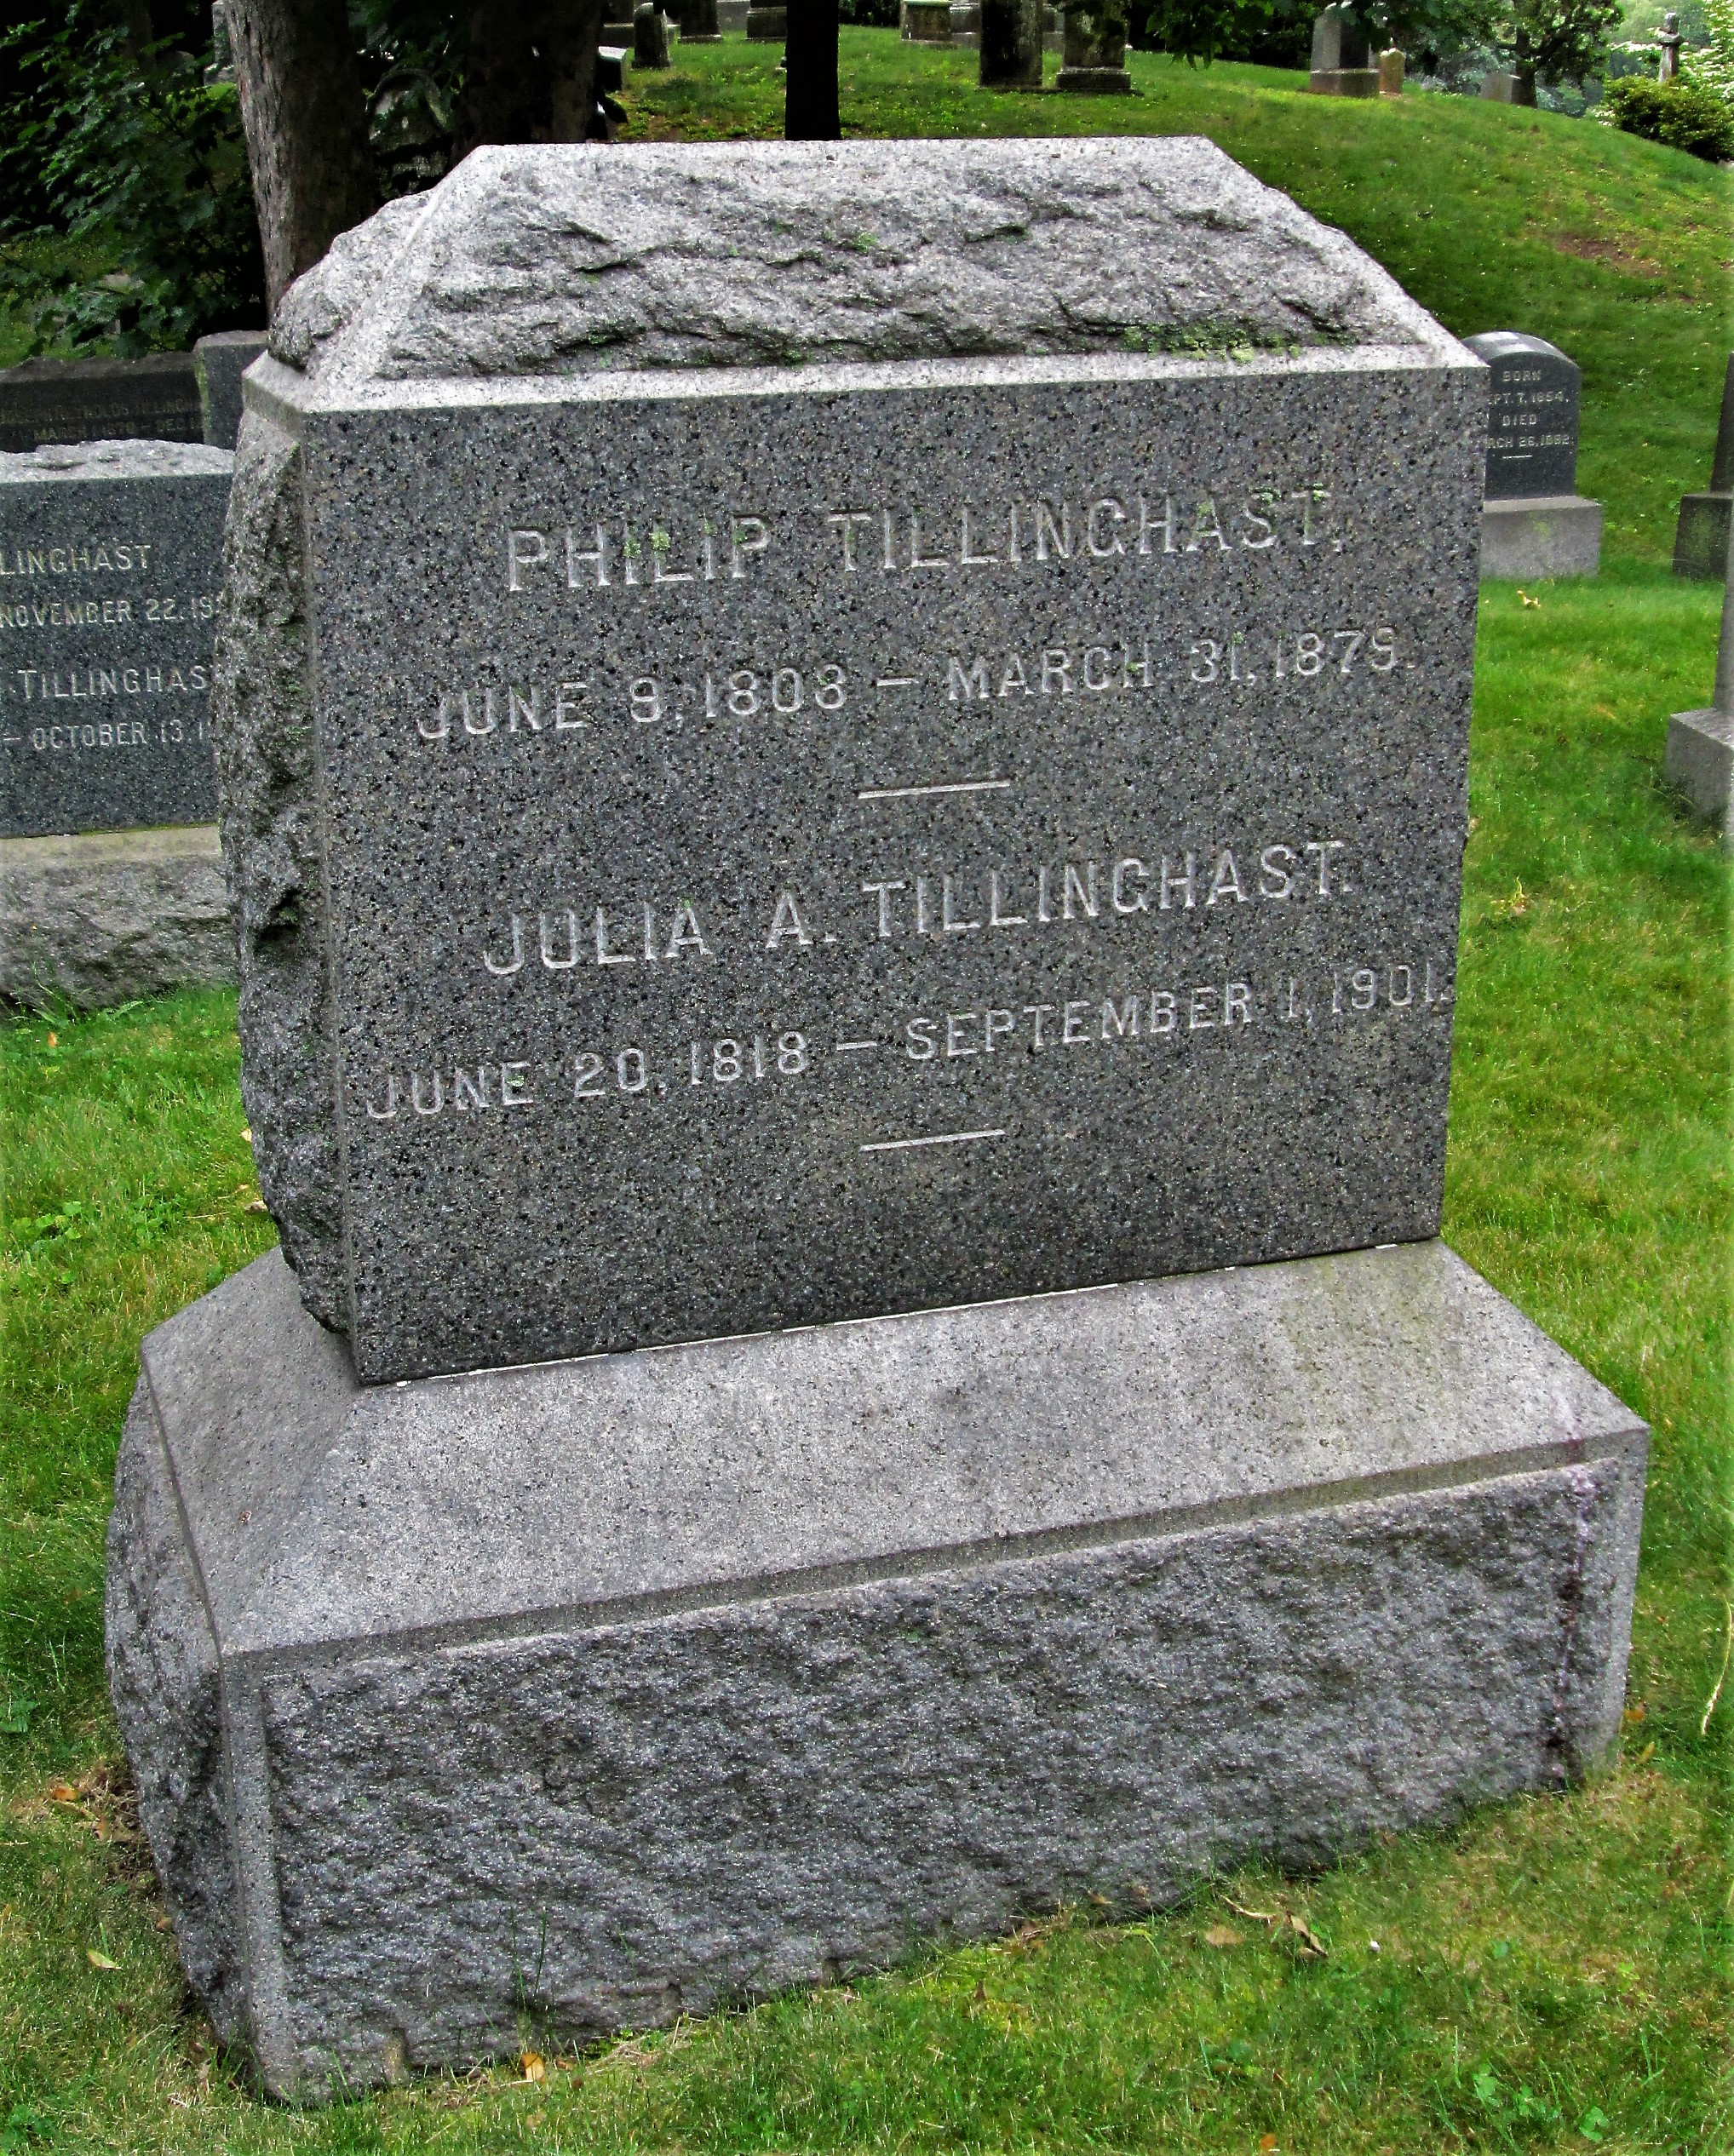 Grave of Philip Tillinghast